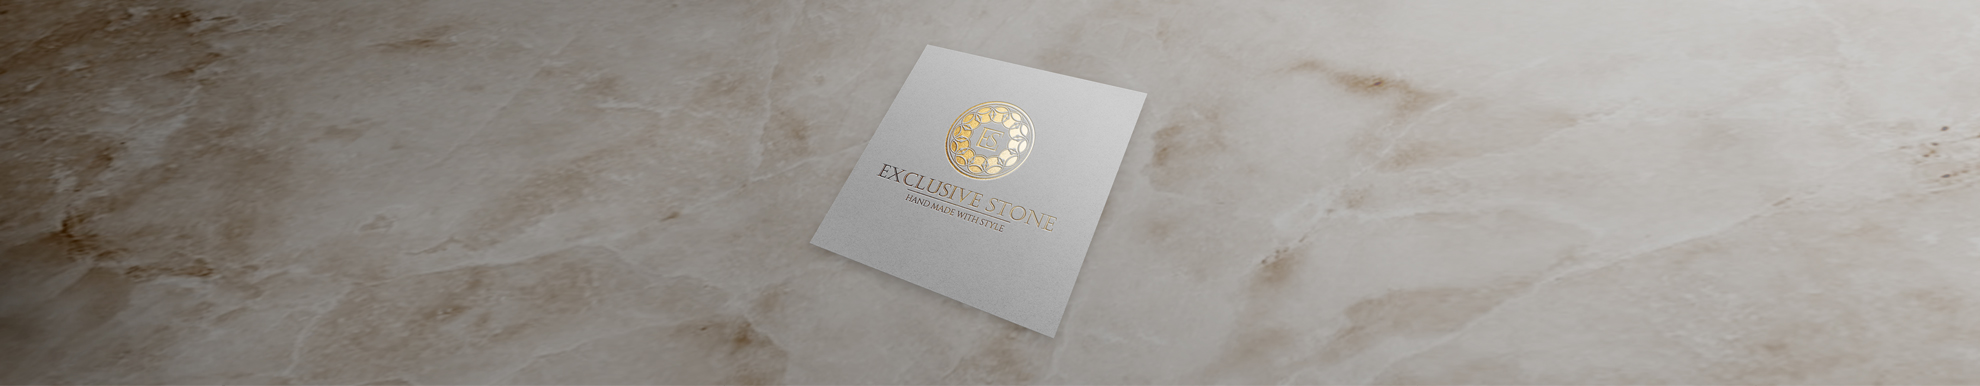 Exclusive Stone - Stone for the Future